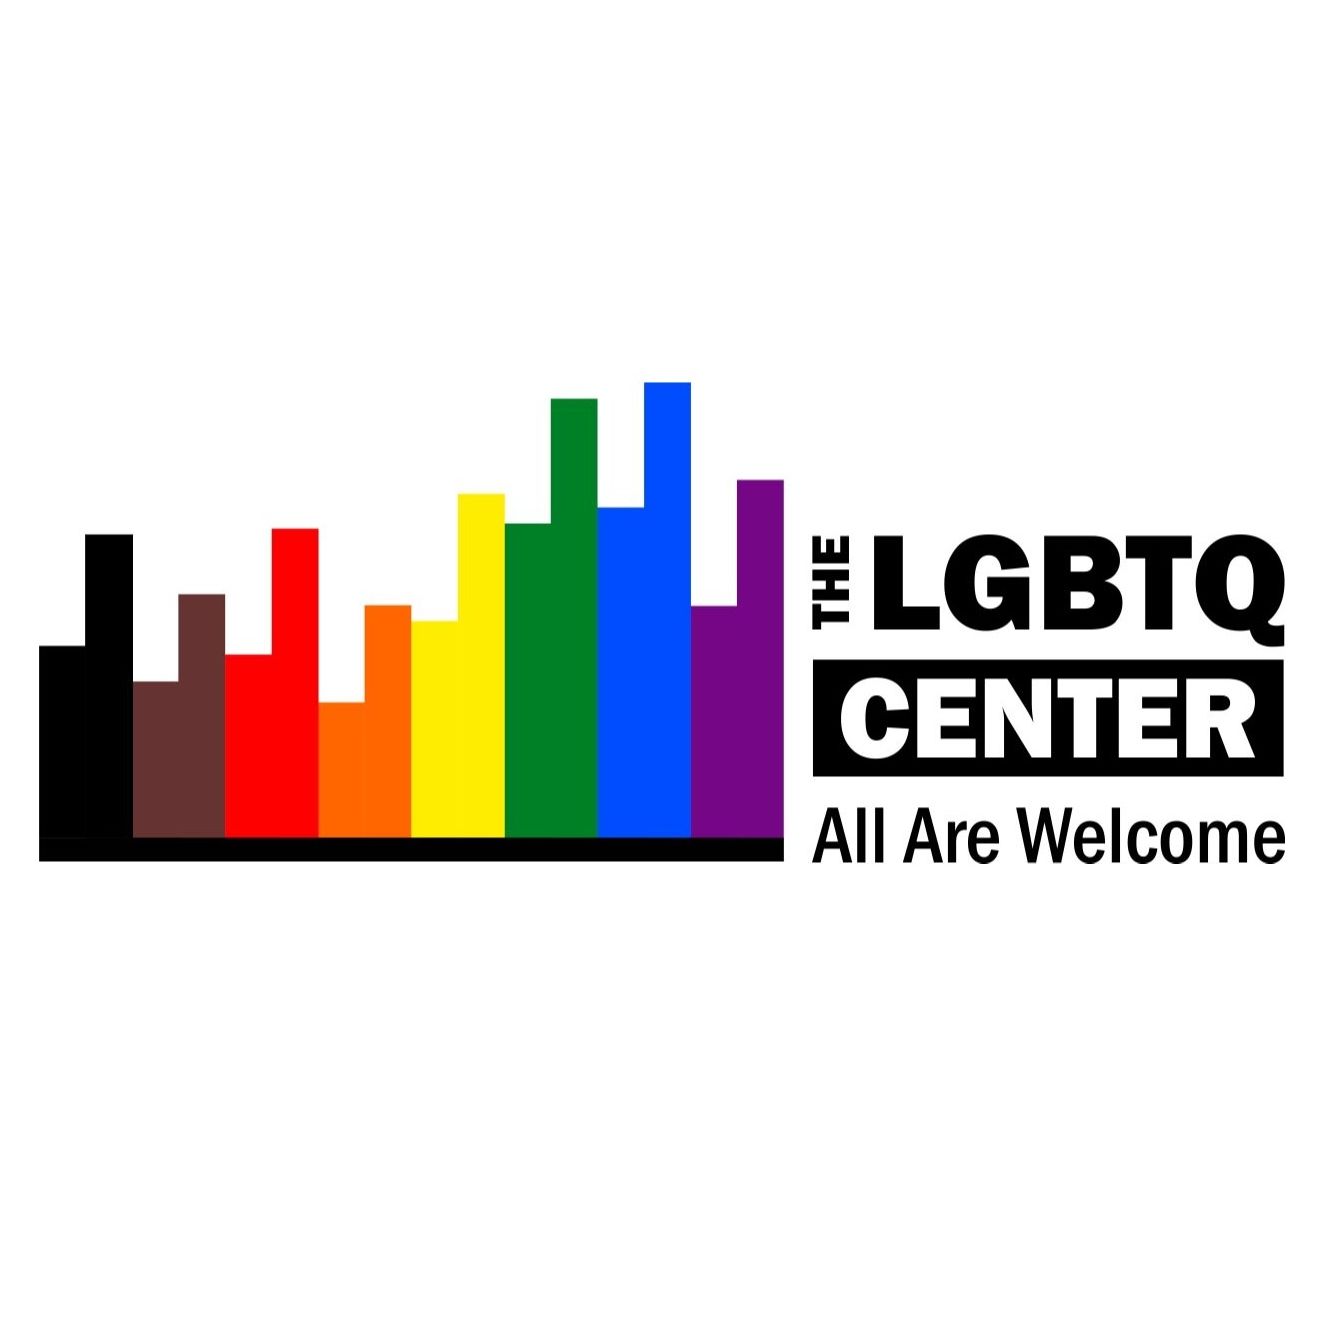 LGBTQ Organization in Indianapolis Indiana - The LGBTQ Center